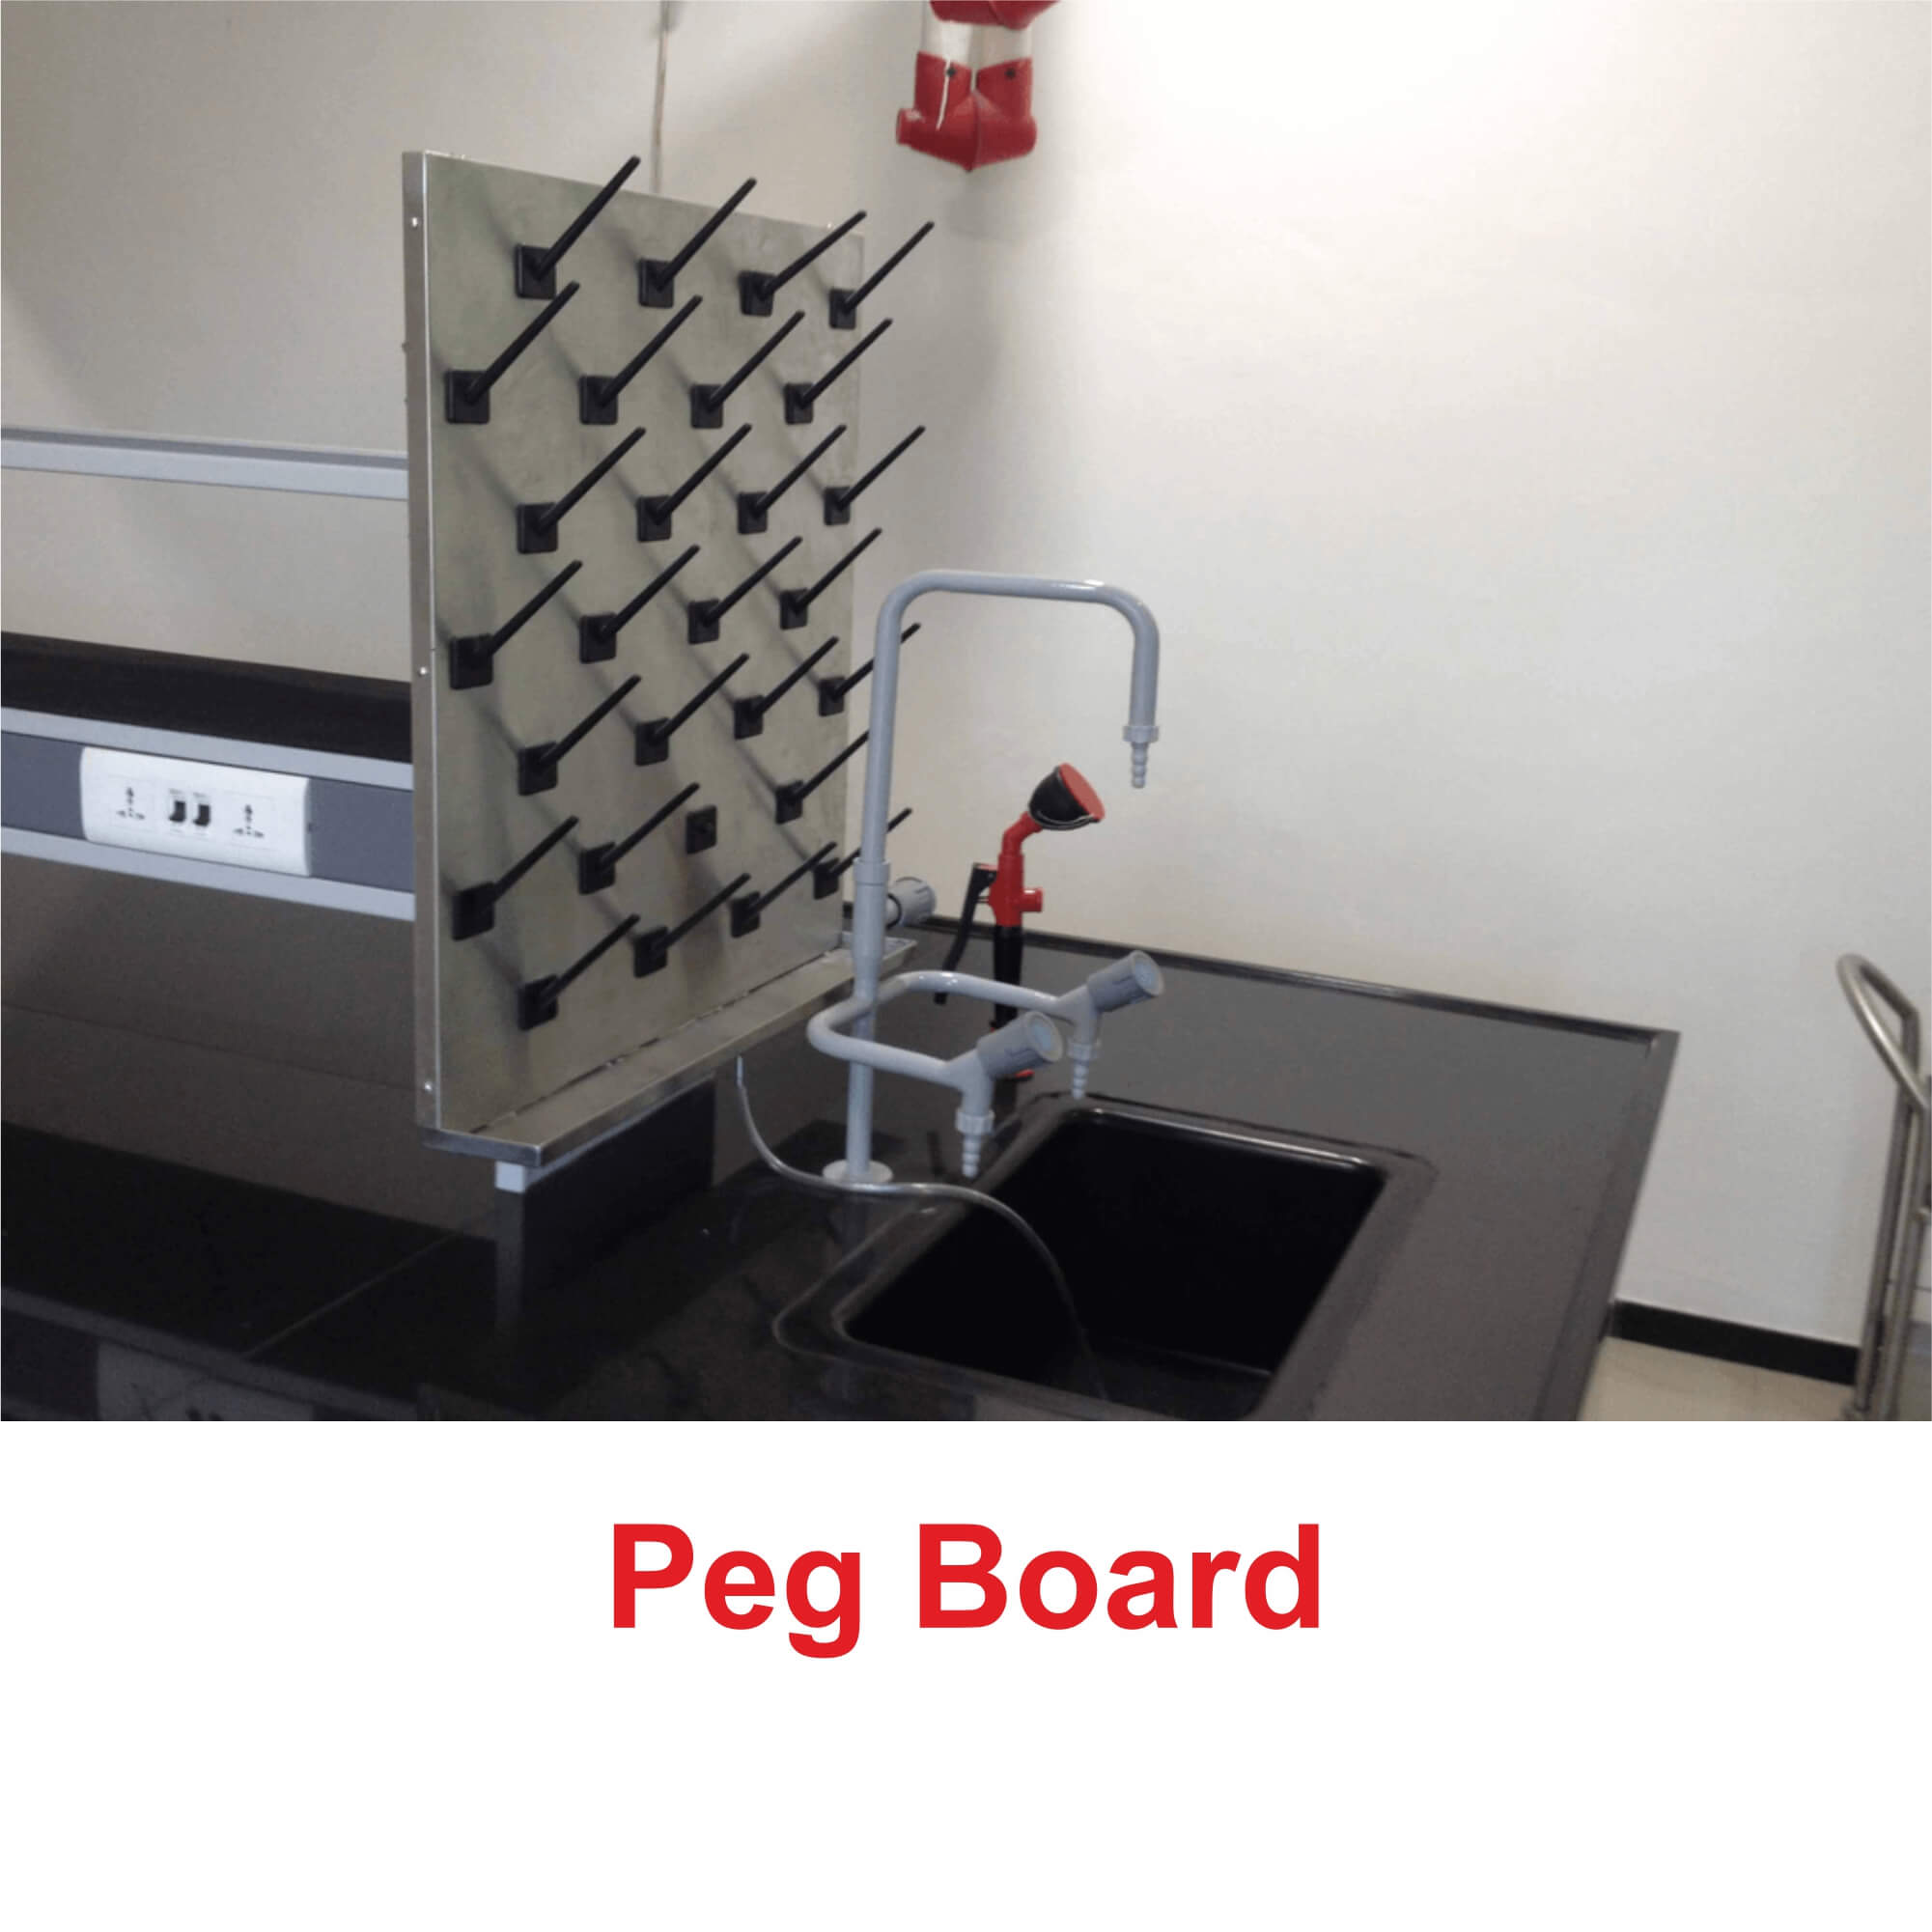 Peg Board Manufacturer in India